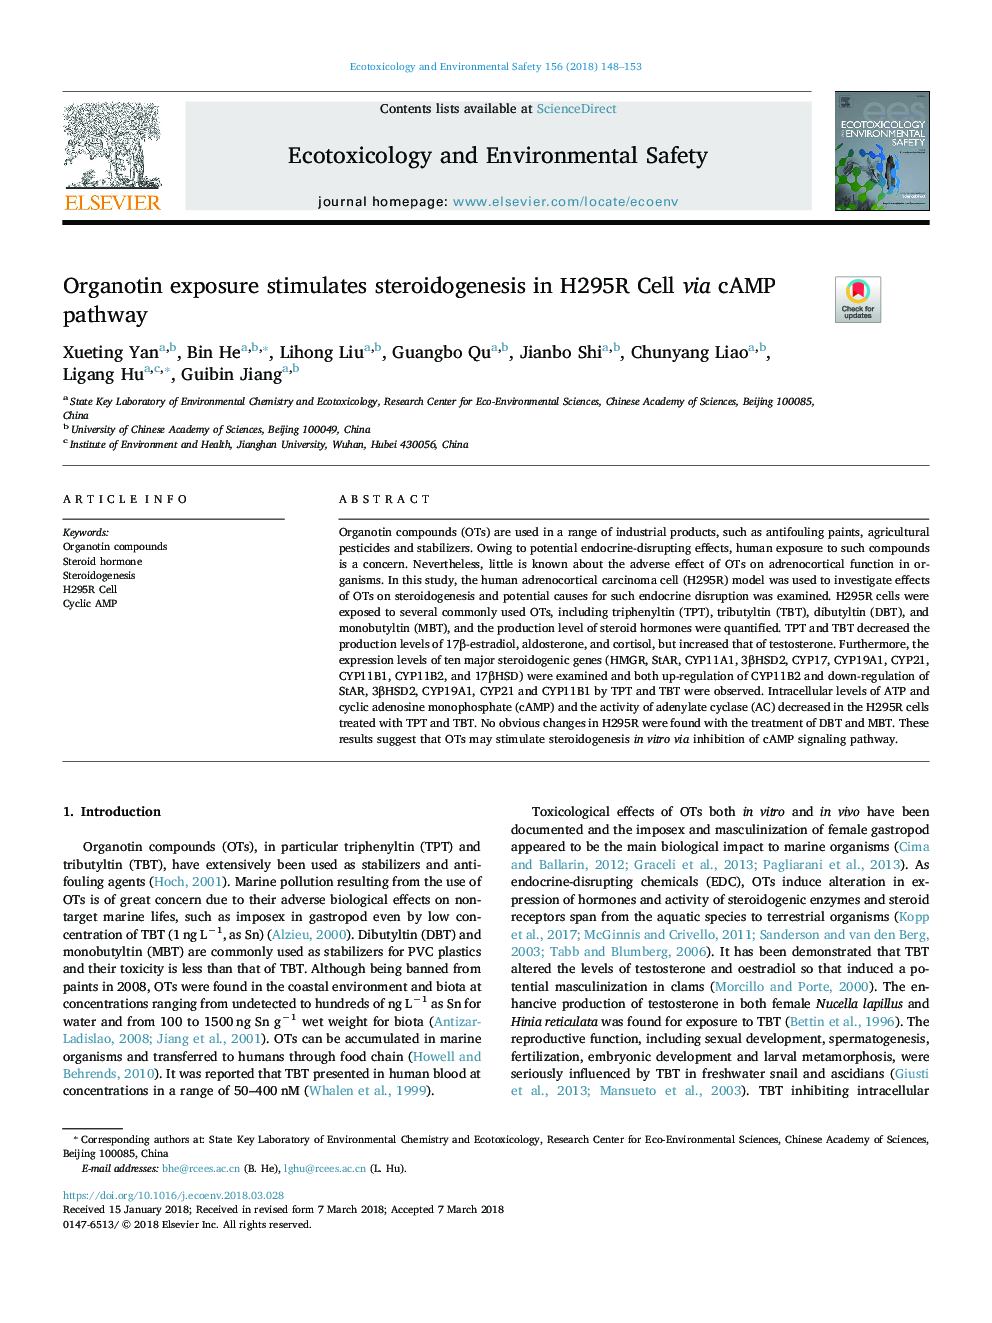 Organotin exposure stimulates steroidogenesis in H295R Cell via cAMP pathway